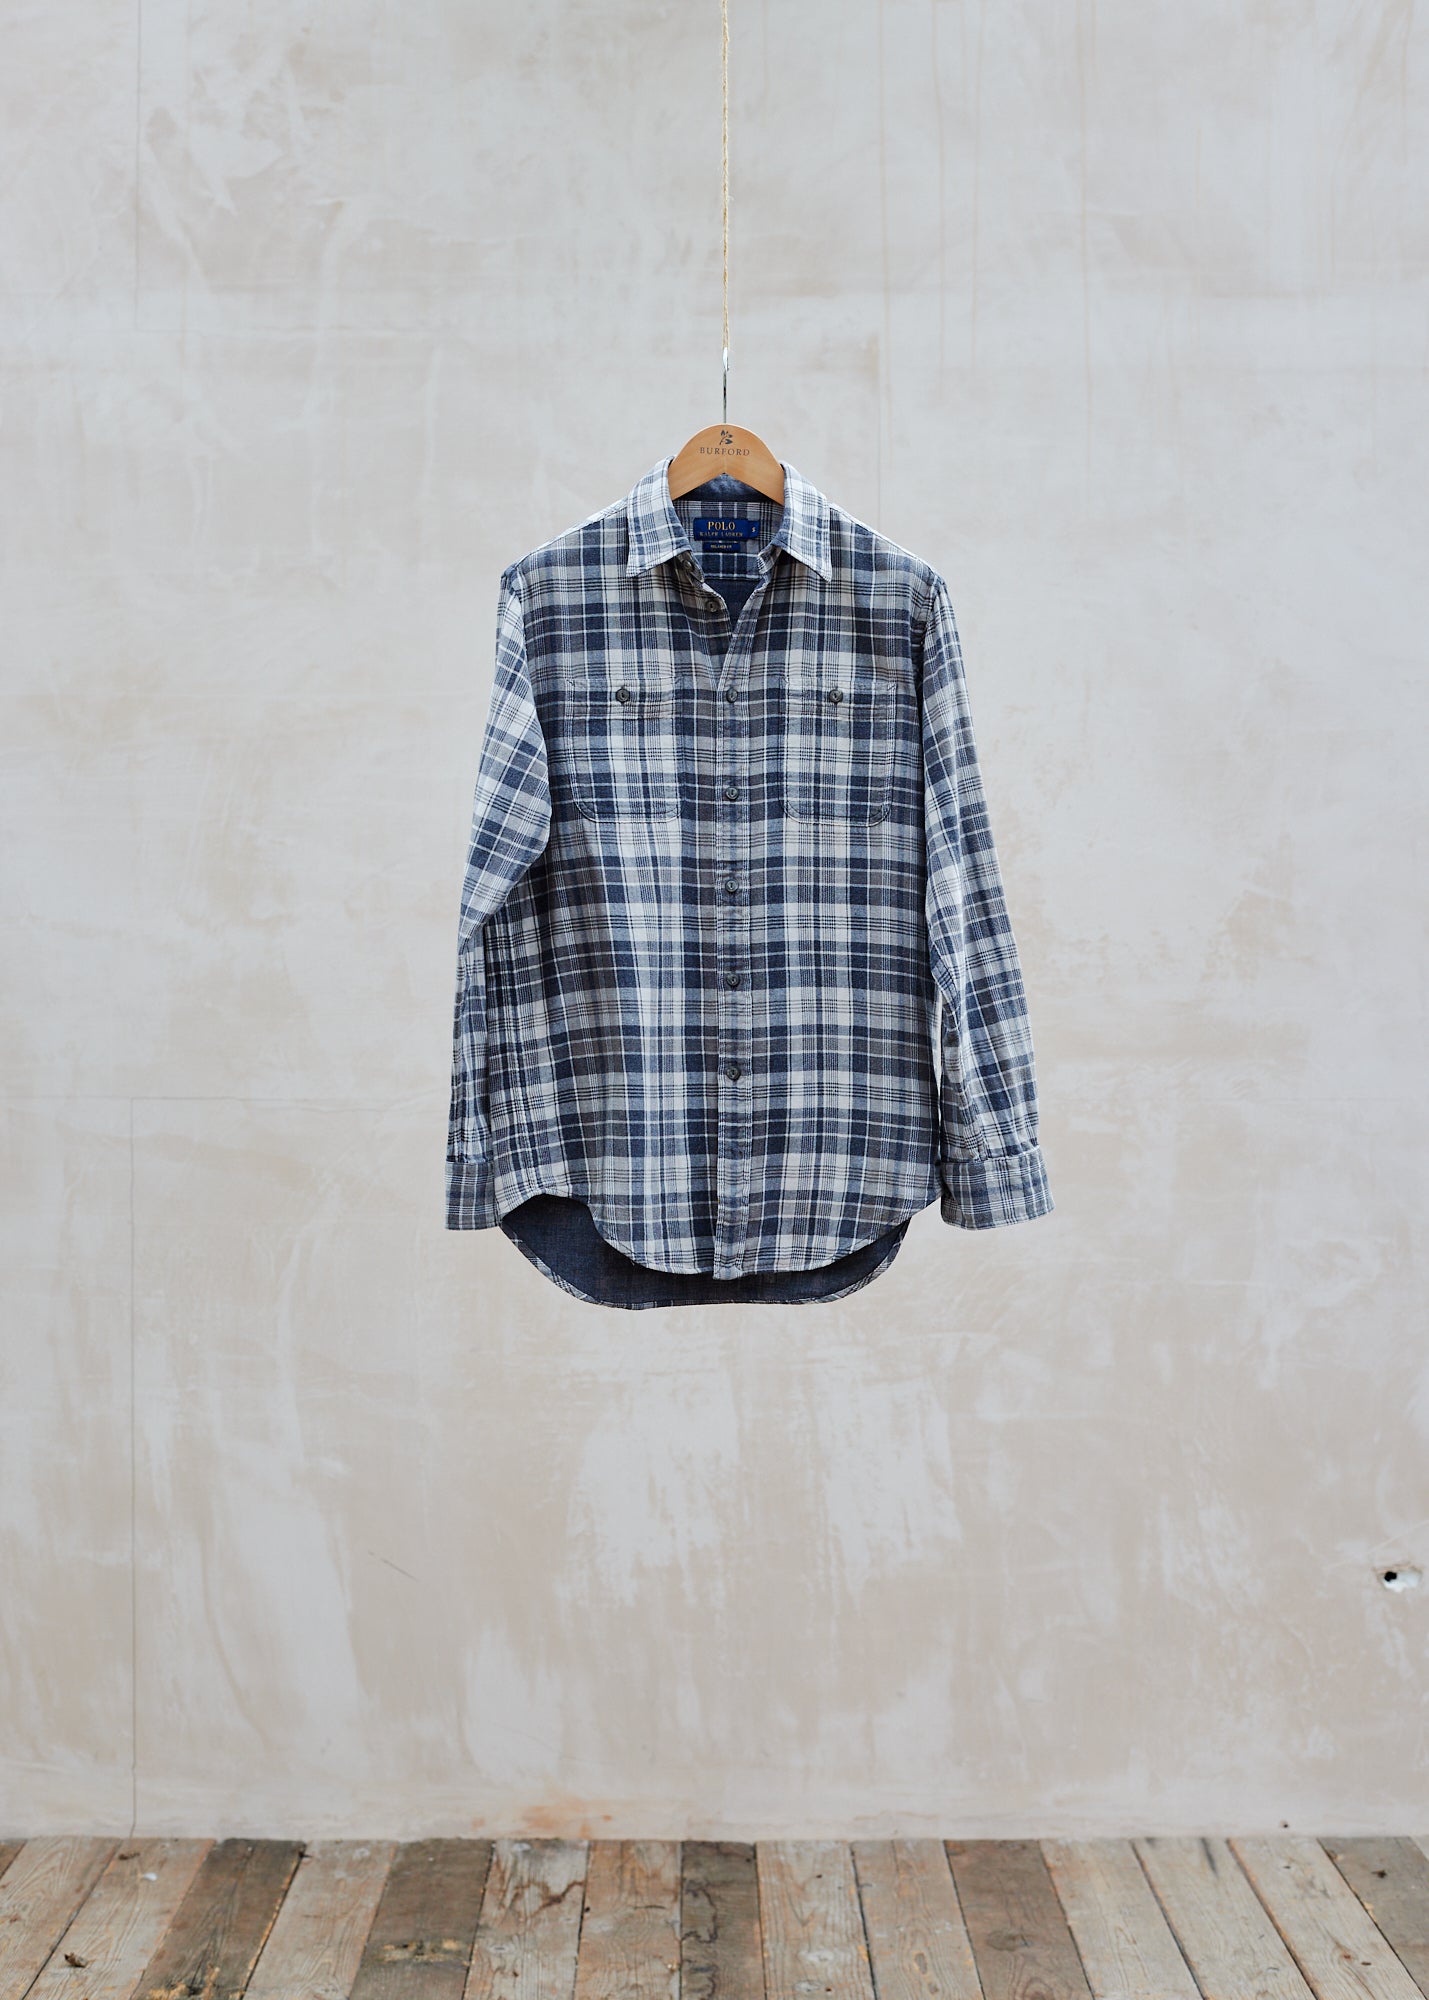 Ralph Lauren Grey Checked Cotton Work Shirt - S